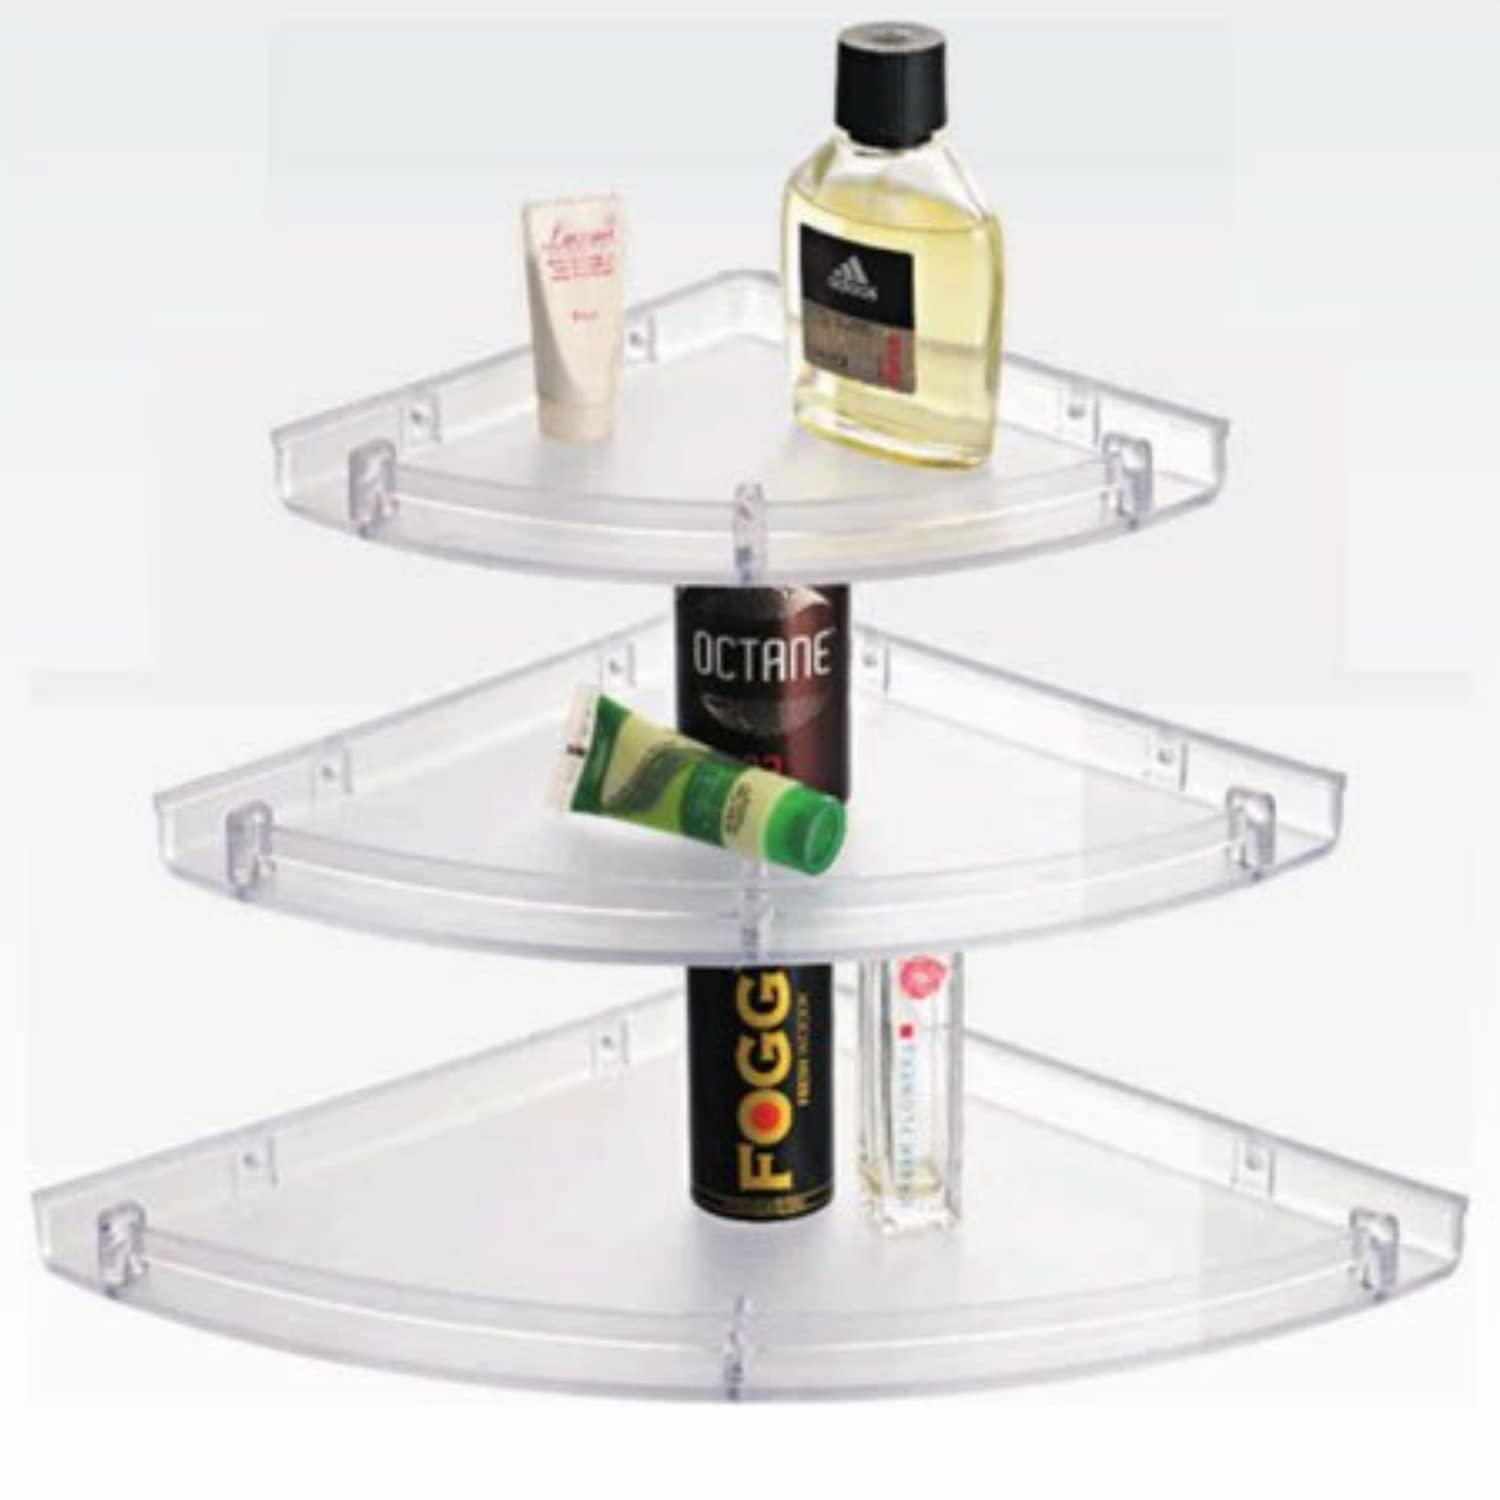 Acrylic corner shelf cm 25x25 double shelf model for shower.